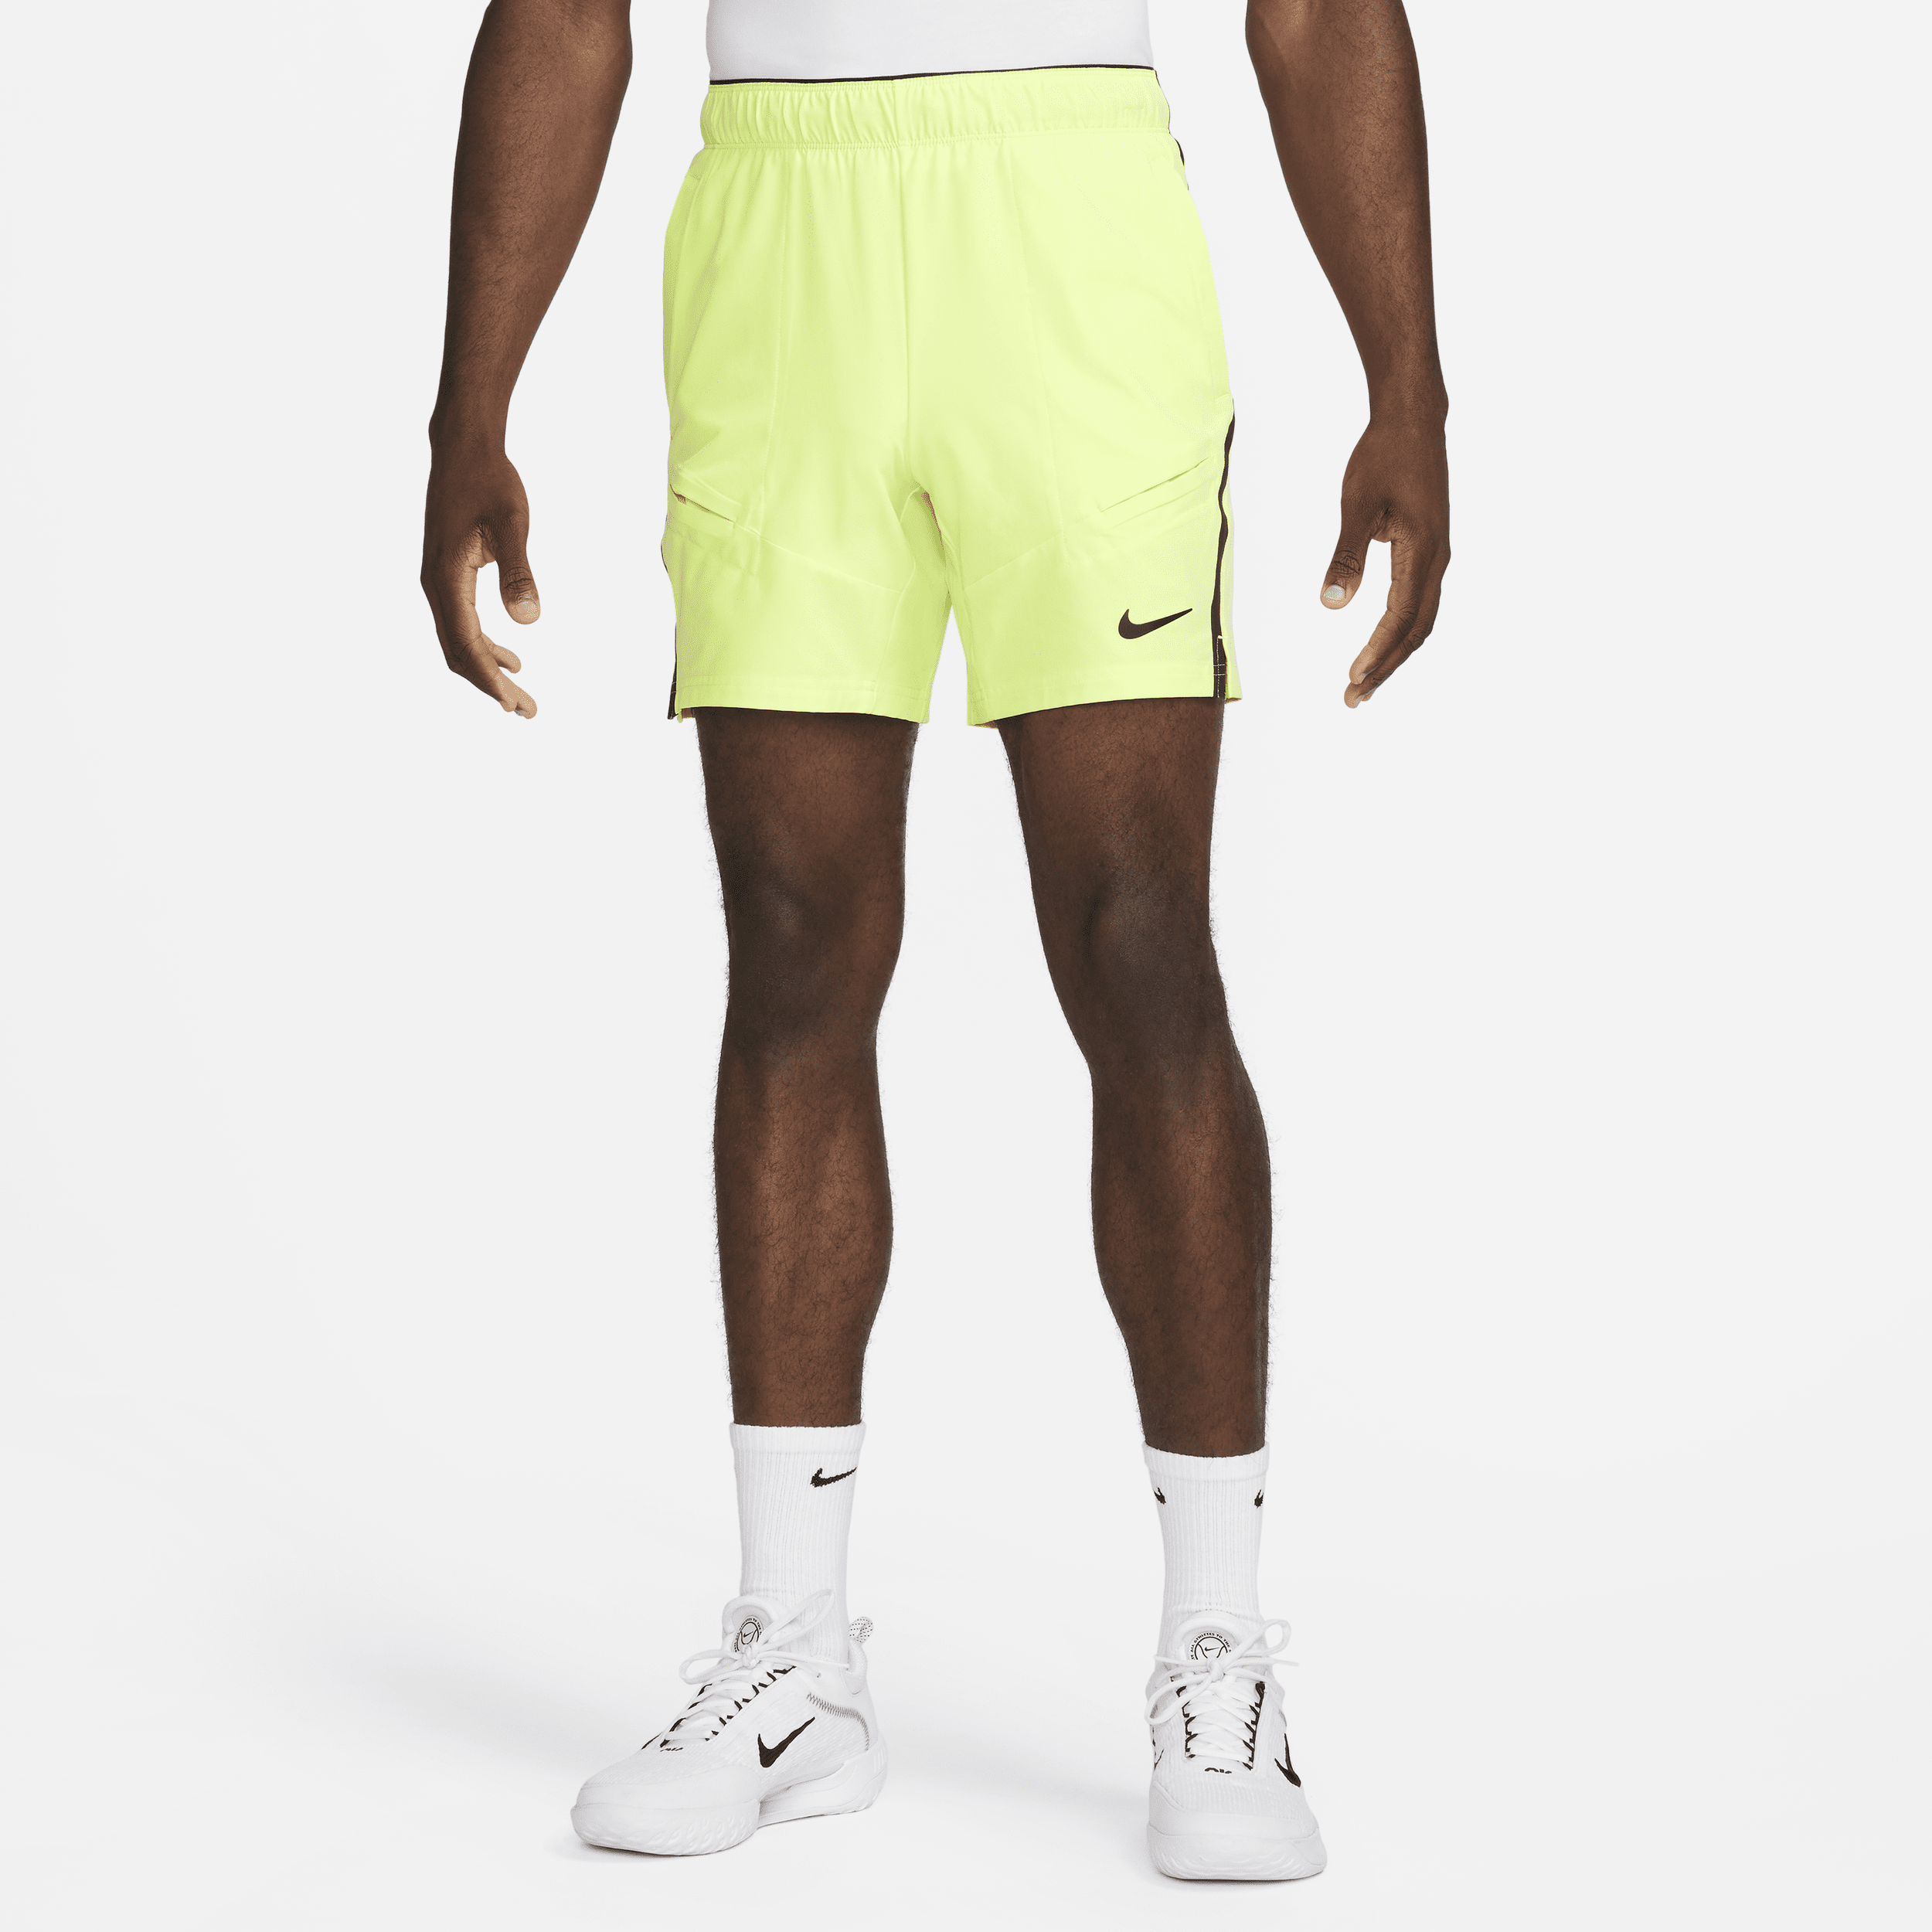 NikeCourt Advantage Pantalón corto de tenis de 18 cm Dri-FIT - Hombre - Amarillo